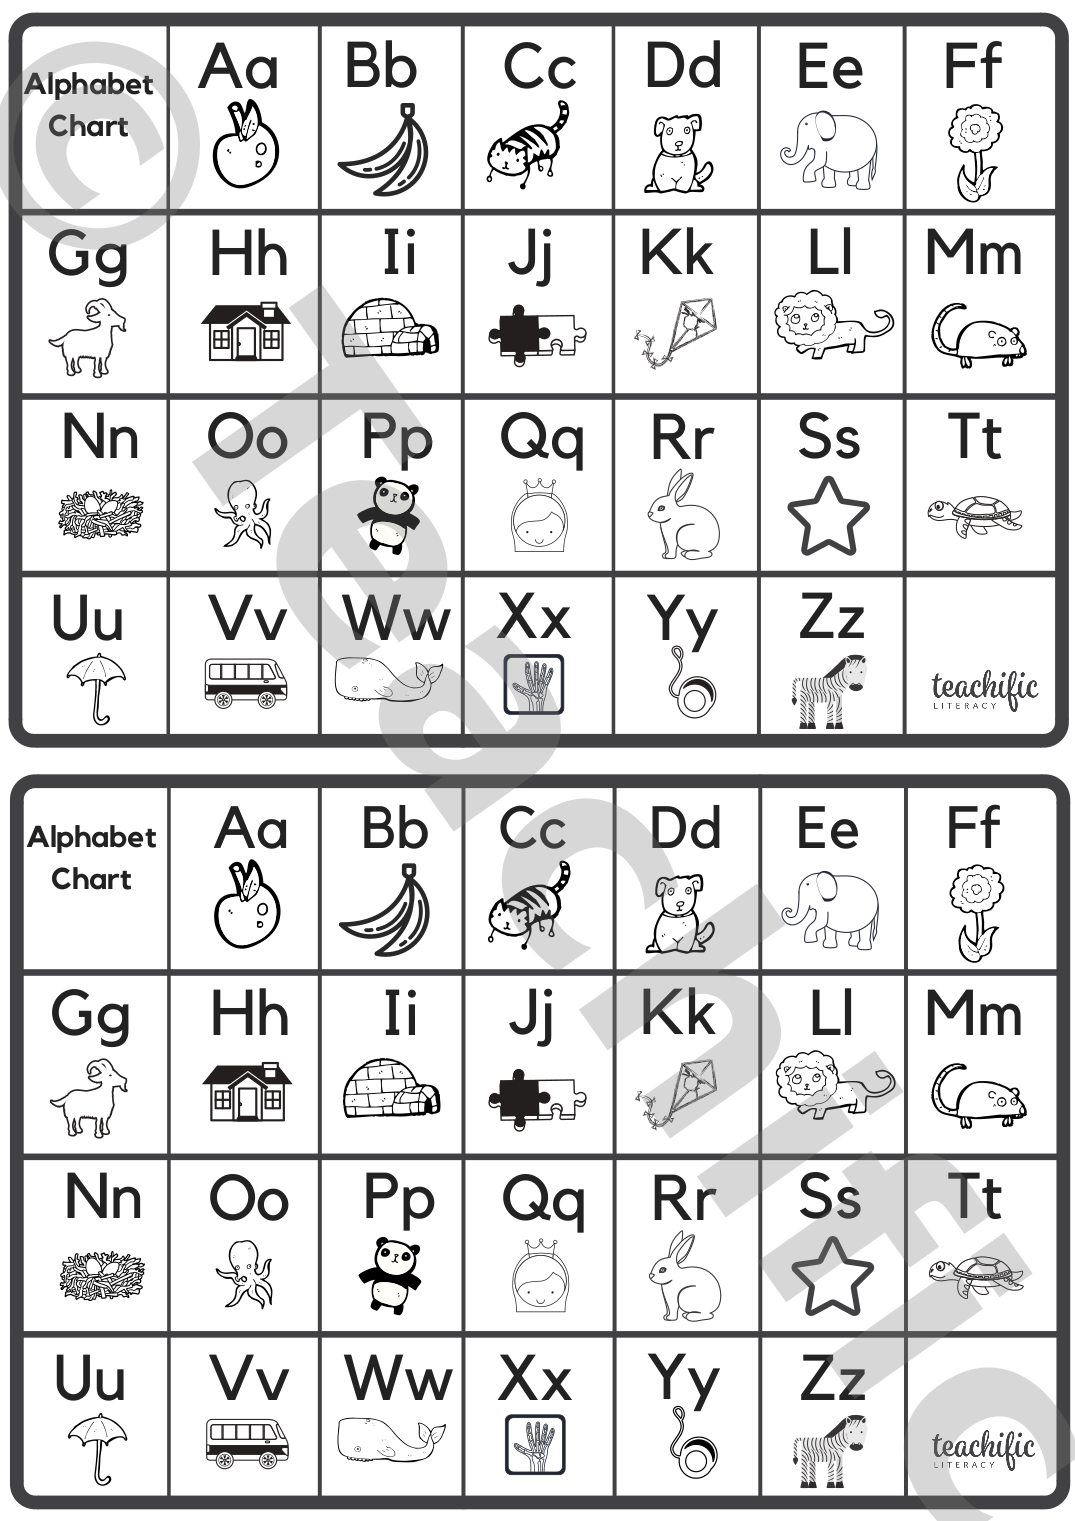 Alphabet Charts: Illustrations Only - Medium | Teachific